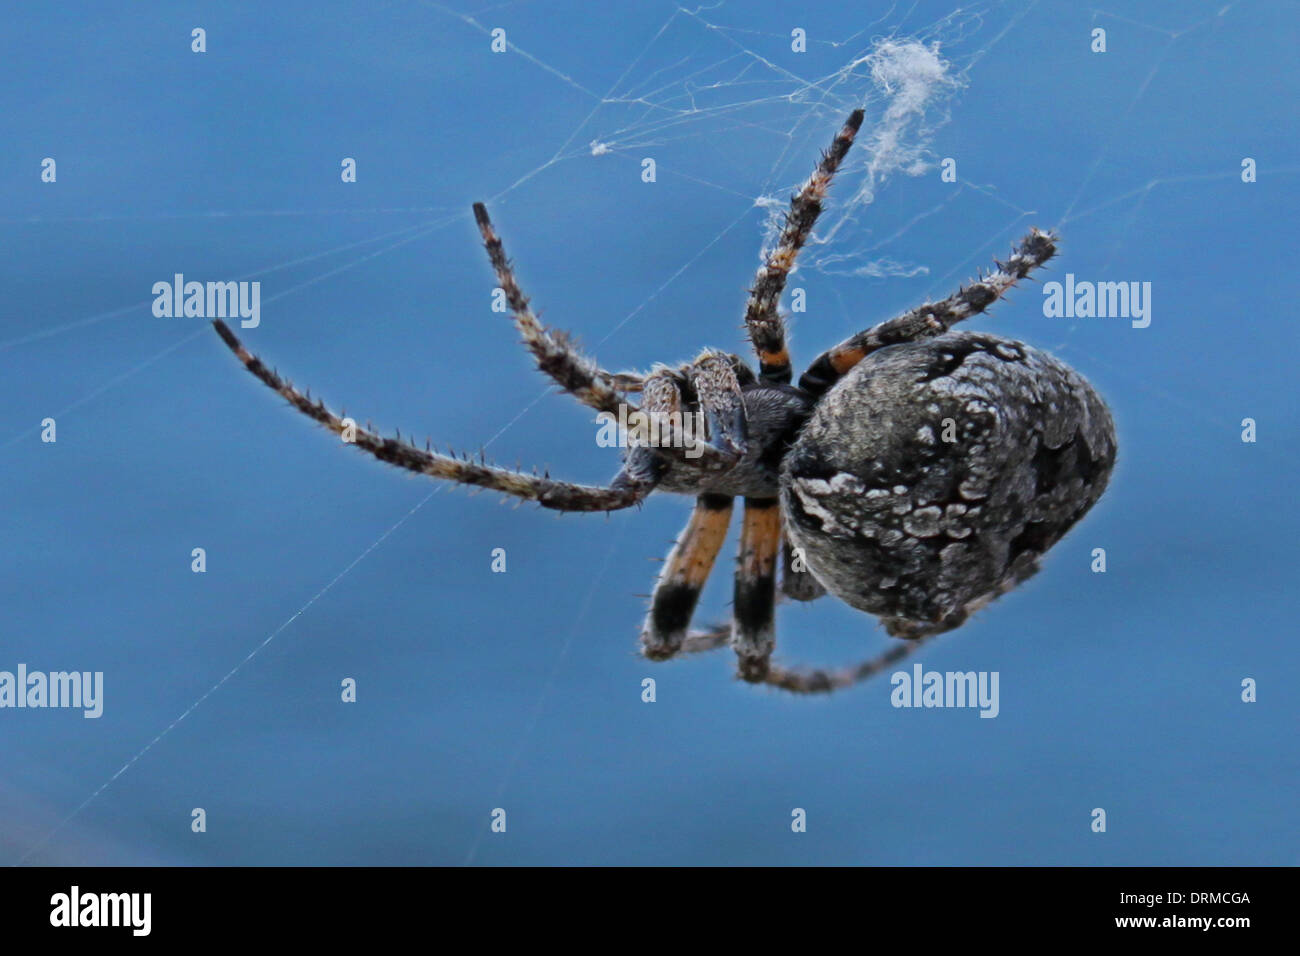 Croce spider (Araneus diadematus) sul cielo blu Foto Stock